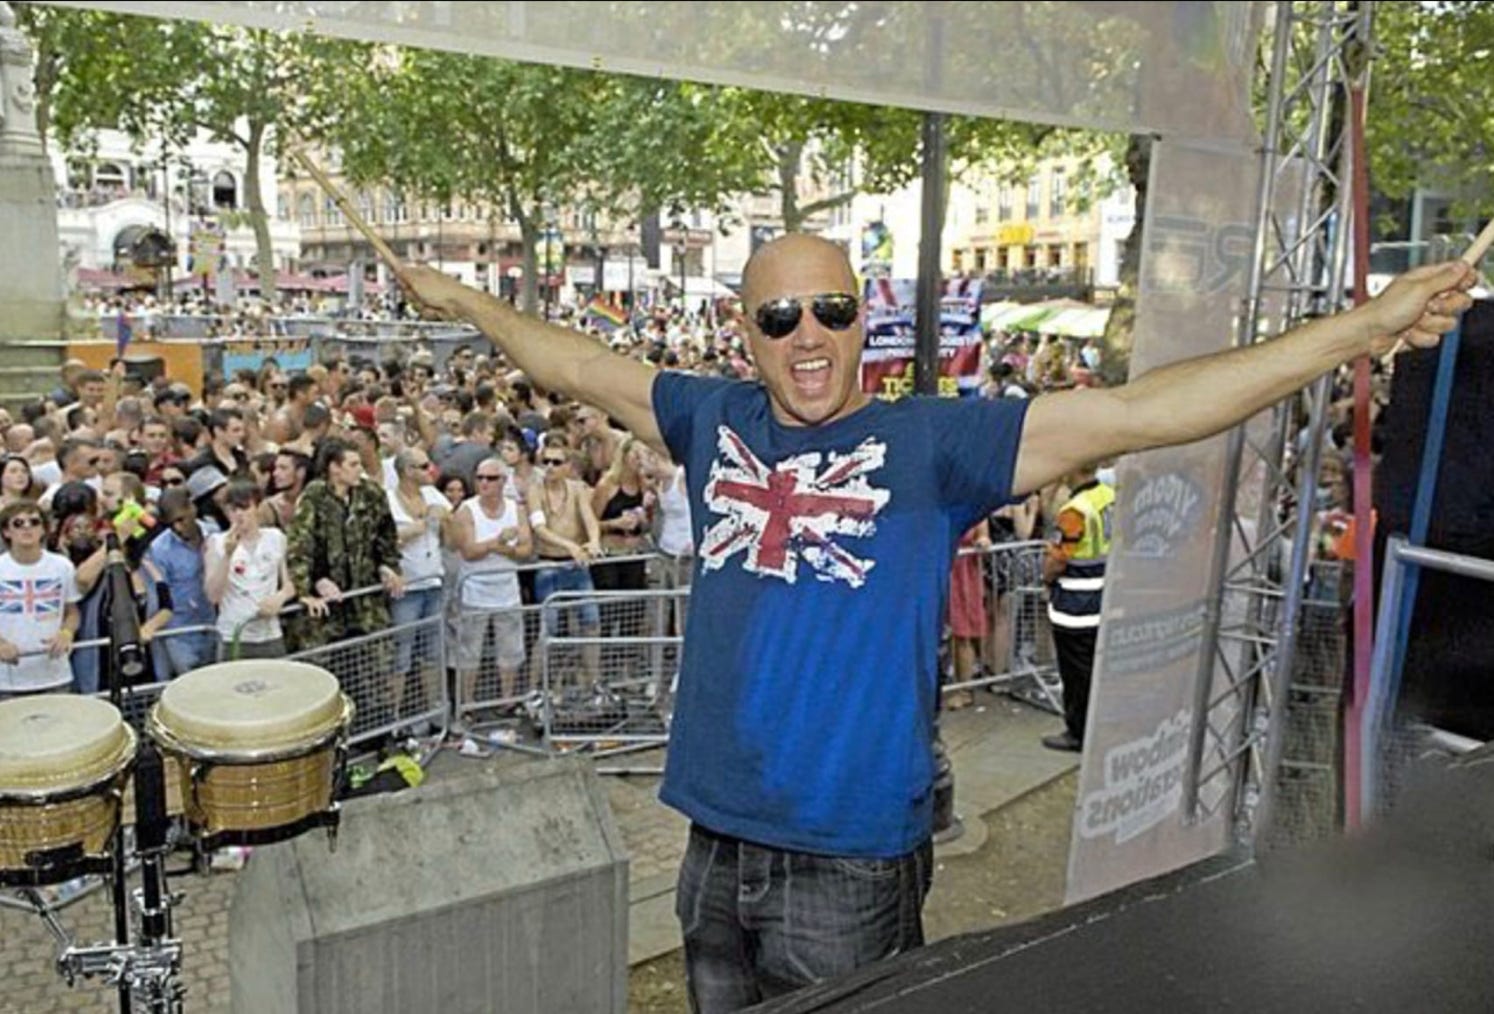 Photograph of David-H performing at London Pride